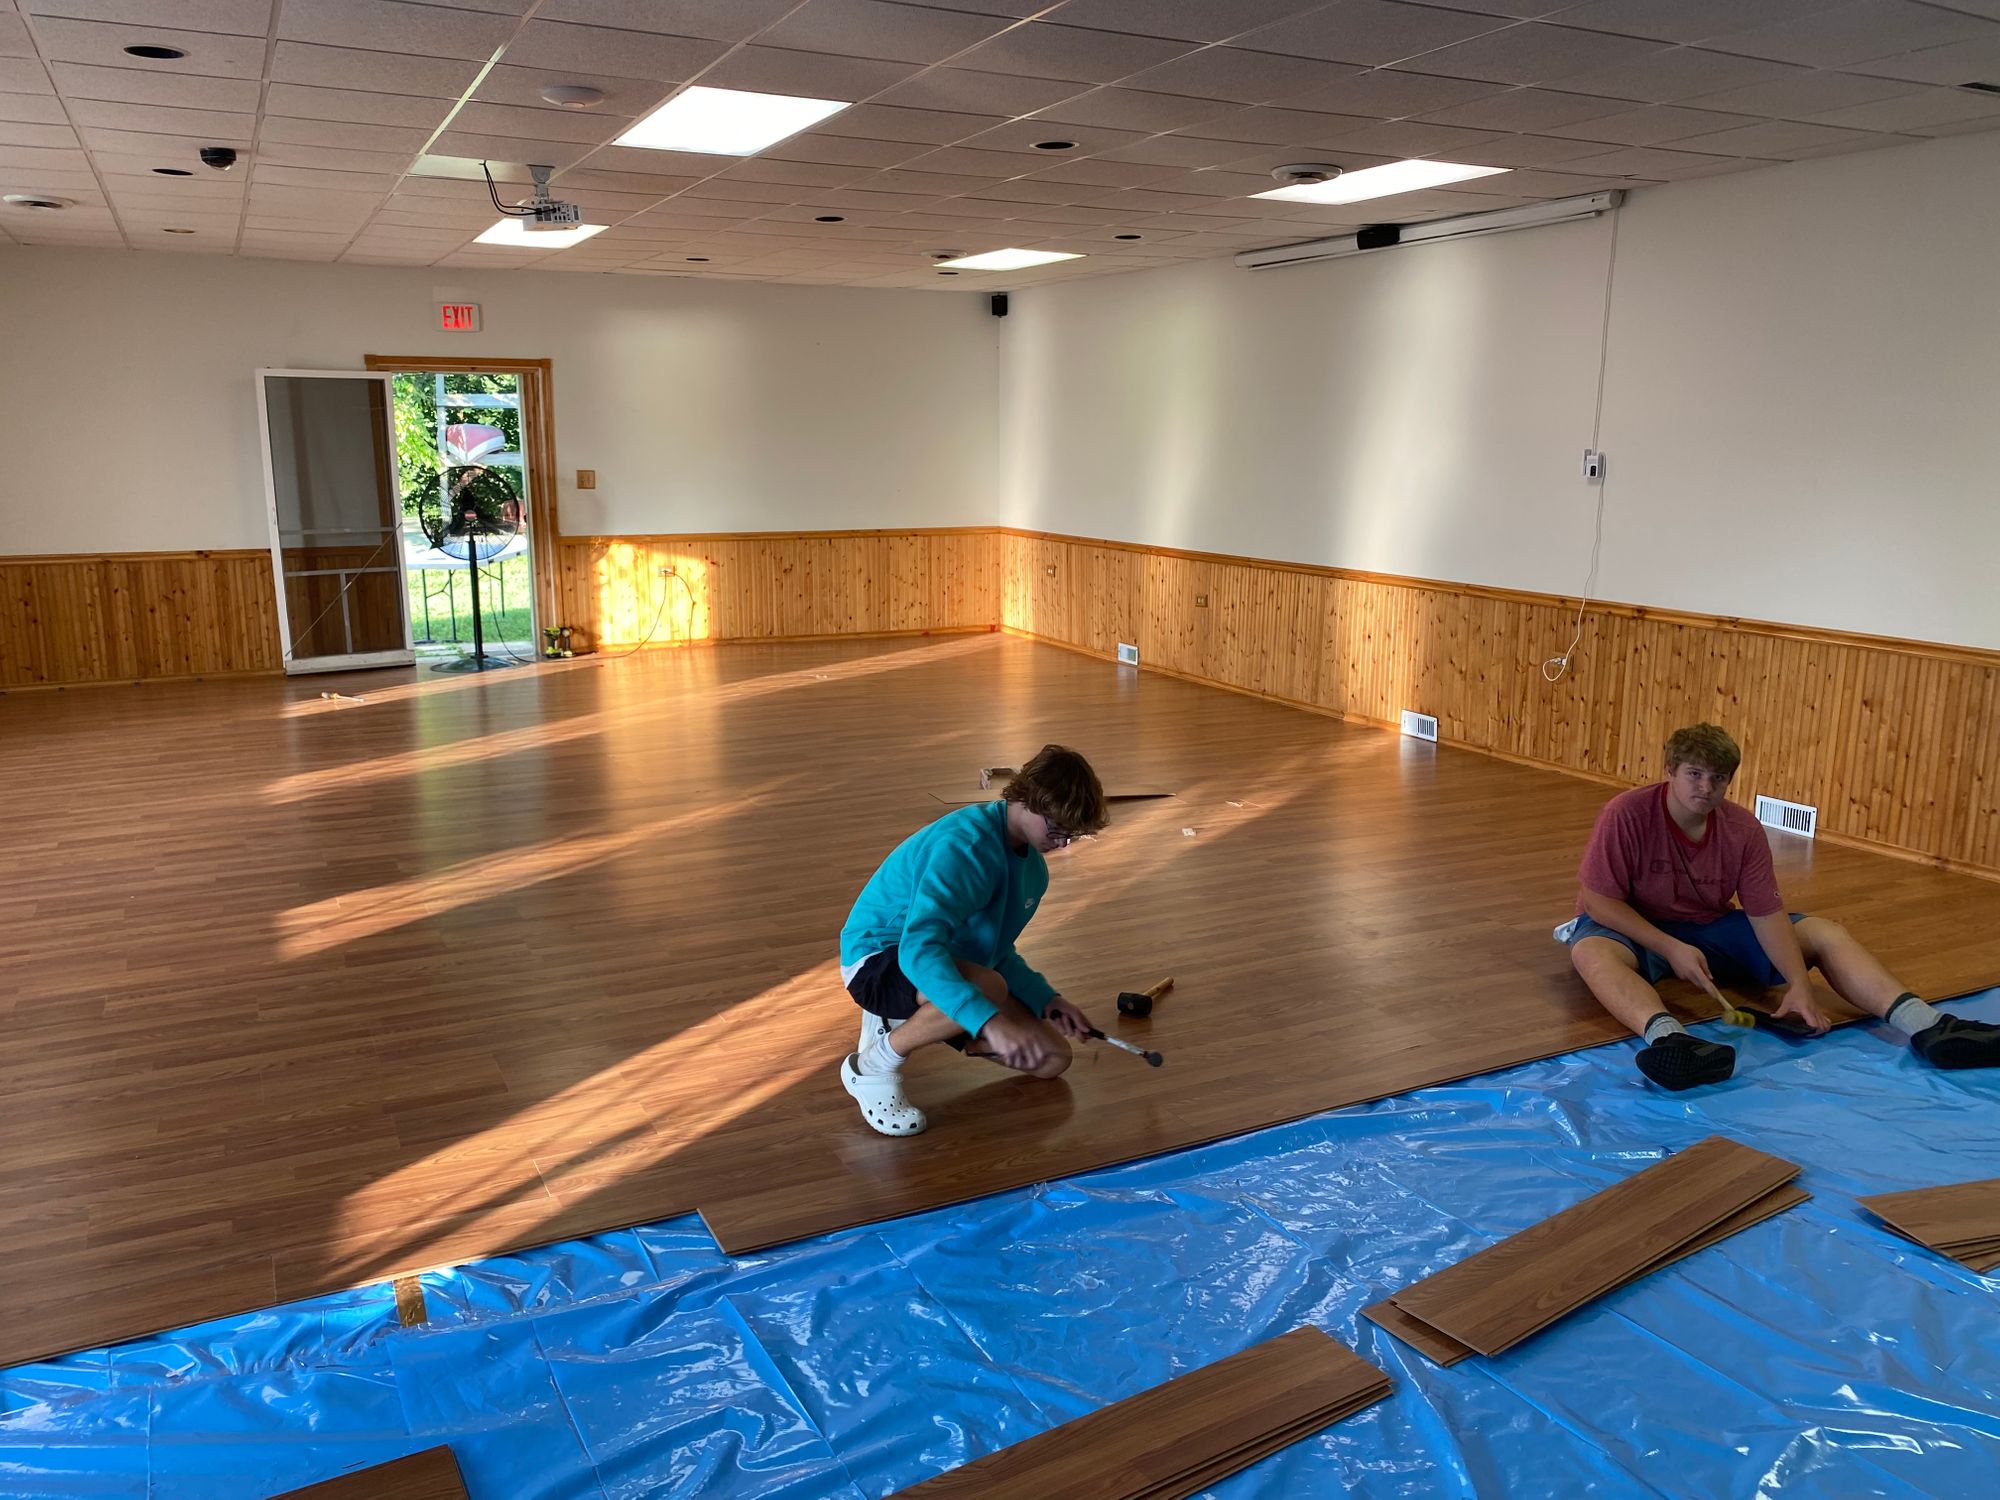 Community Center flooring redone.